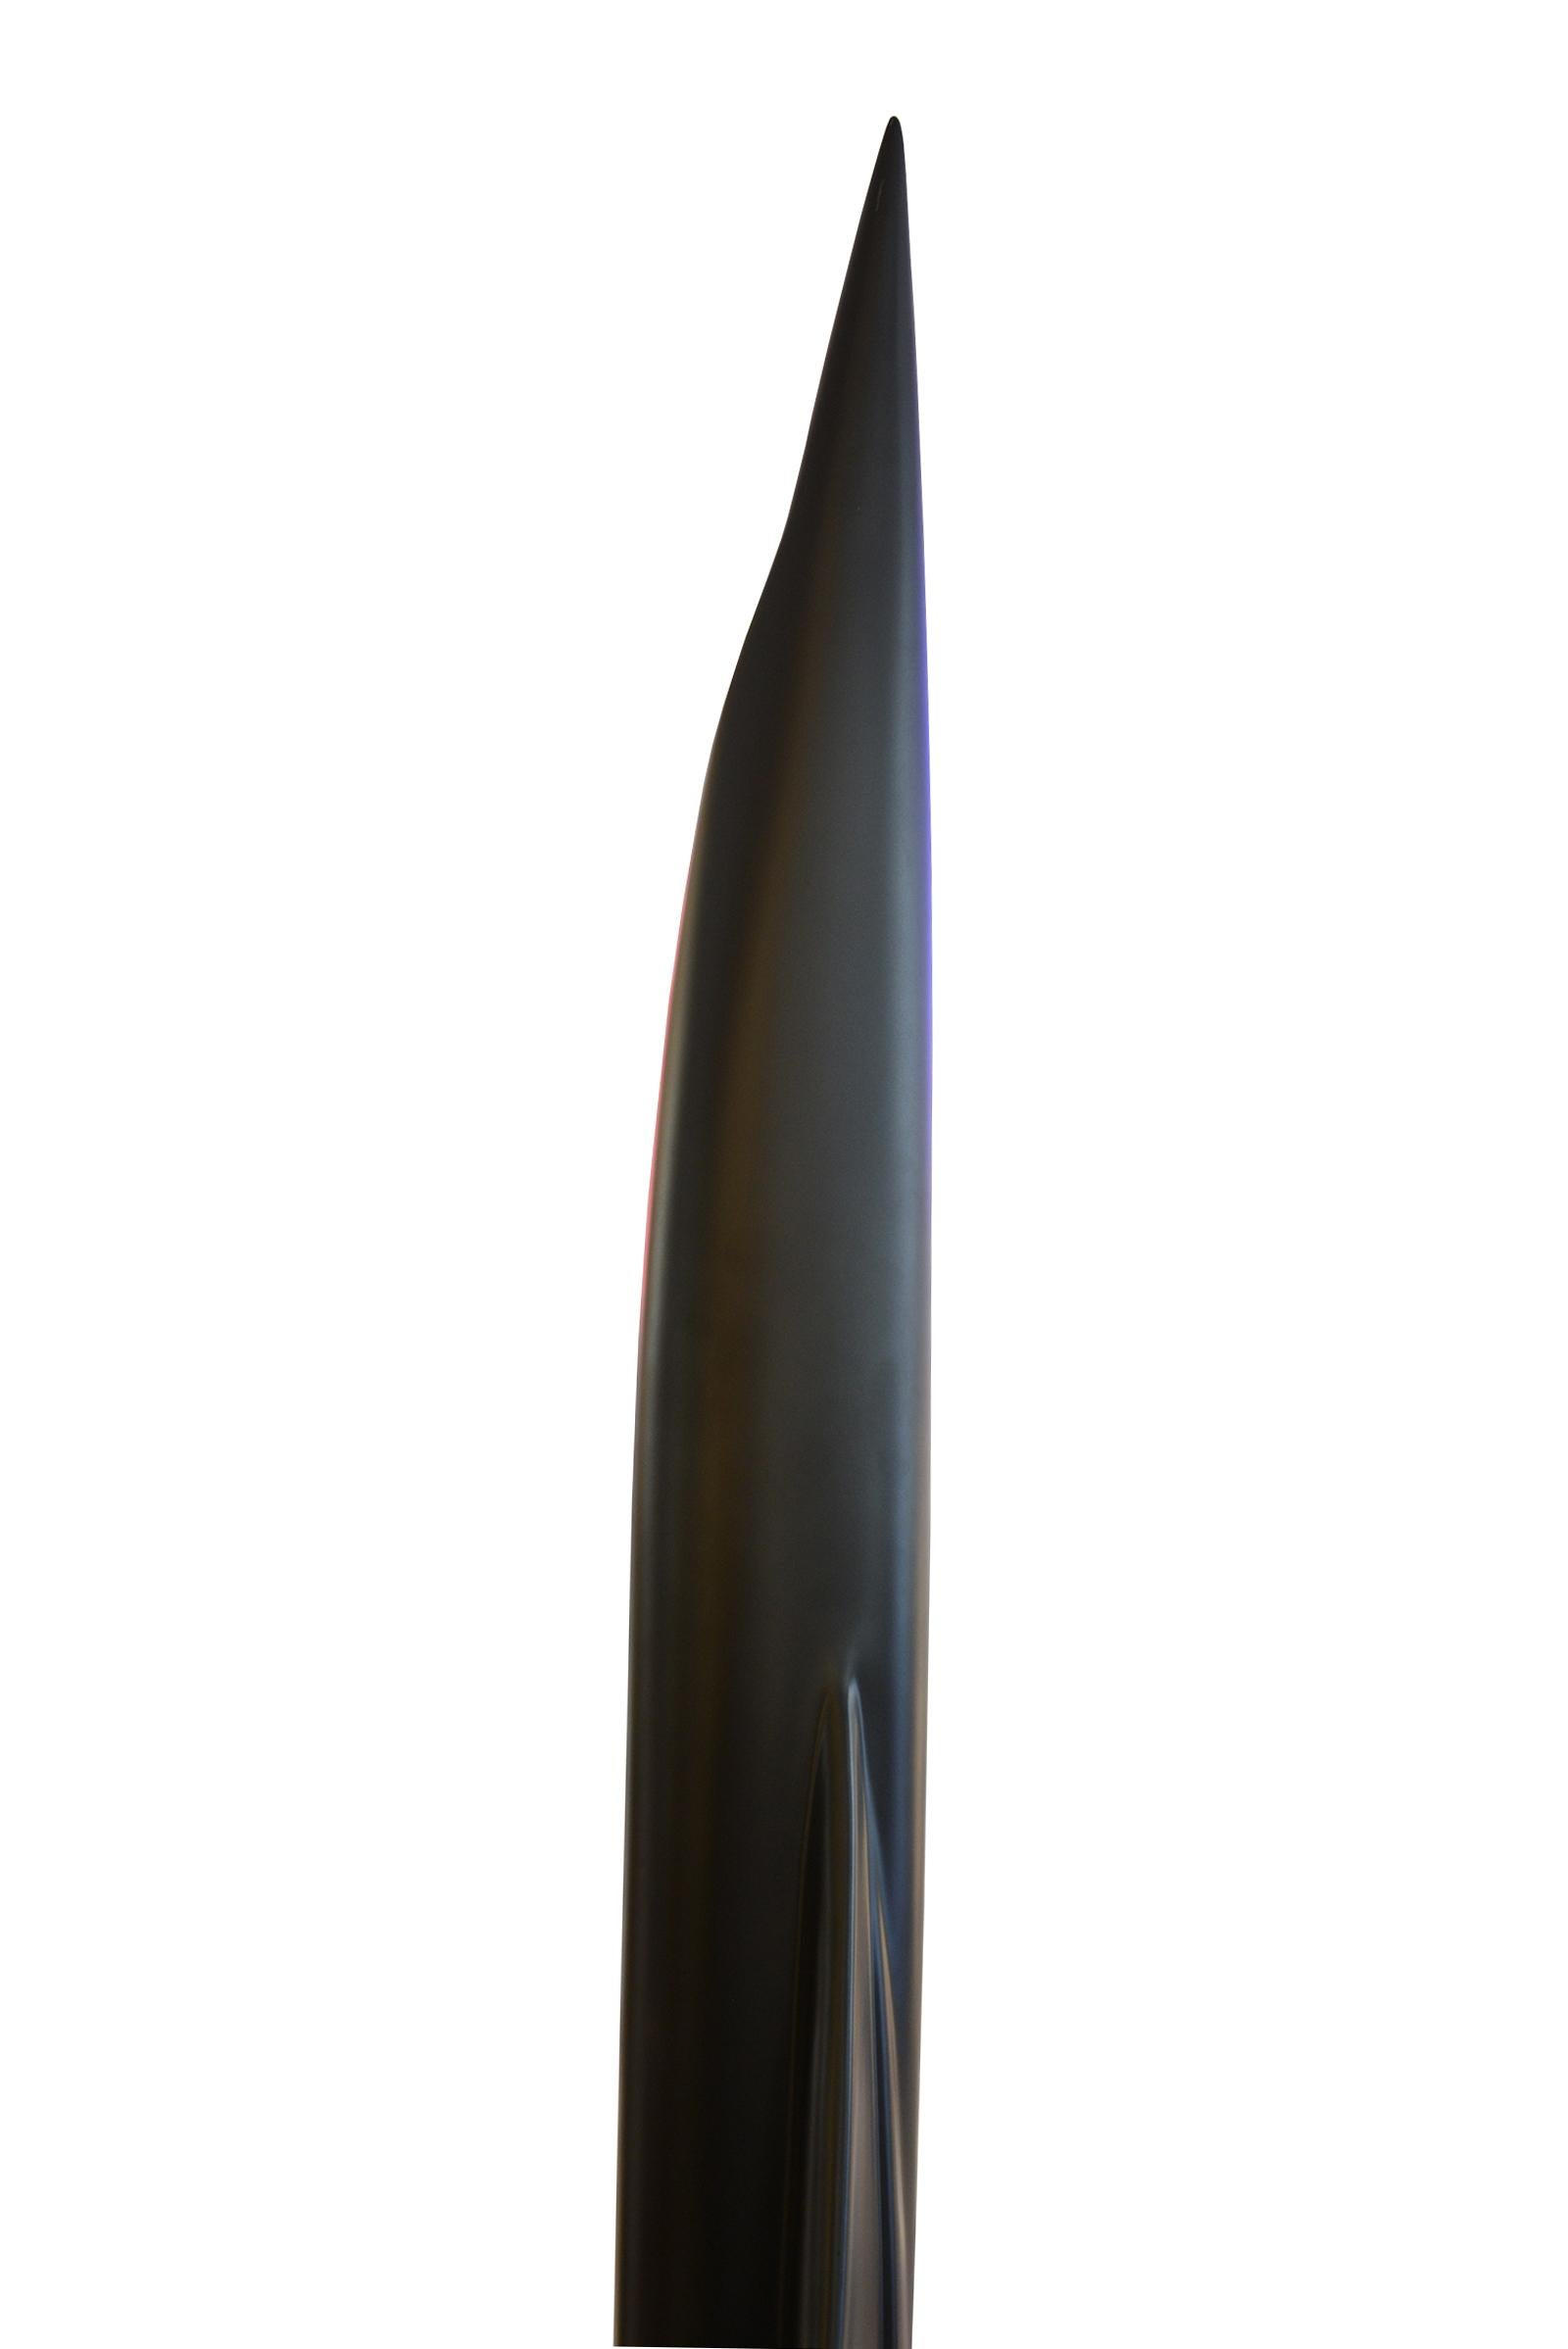 Concorde-Modell Schwarze Skulptur im Angebot 2